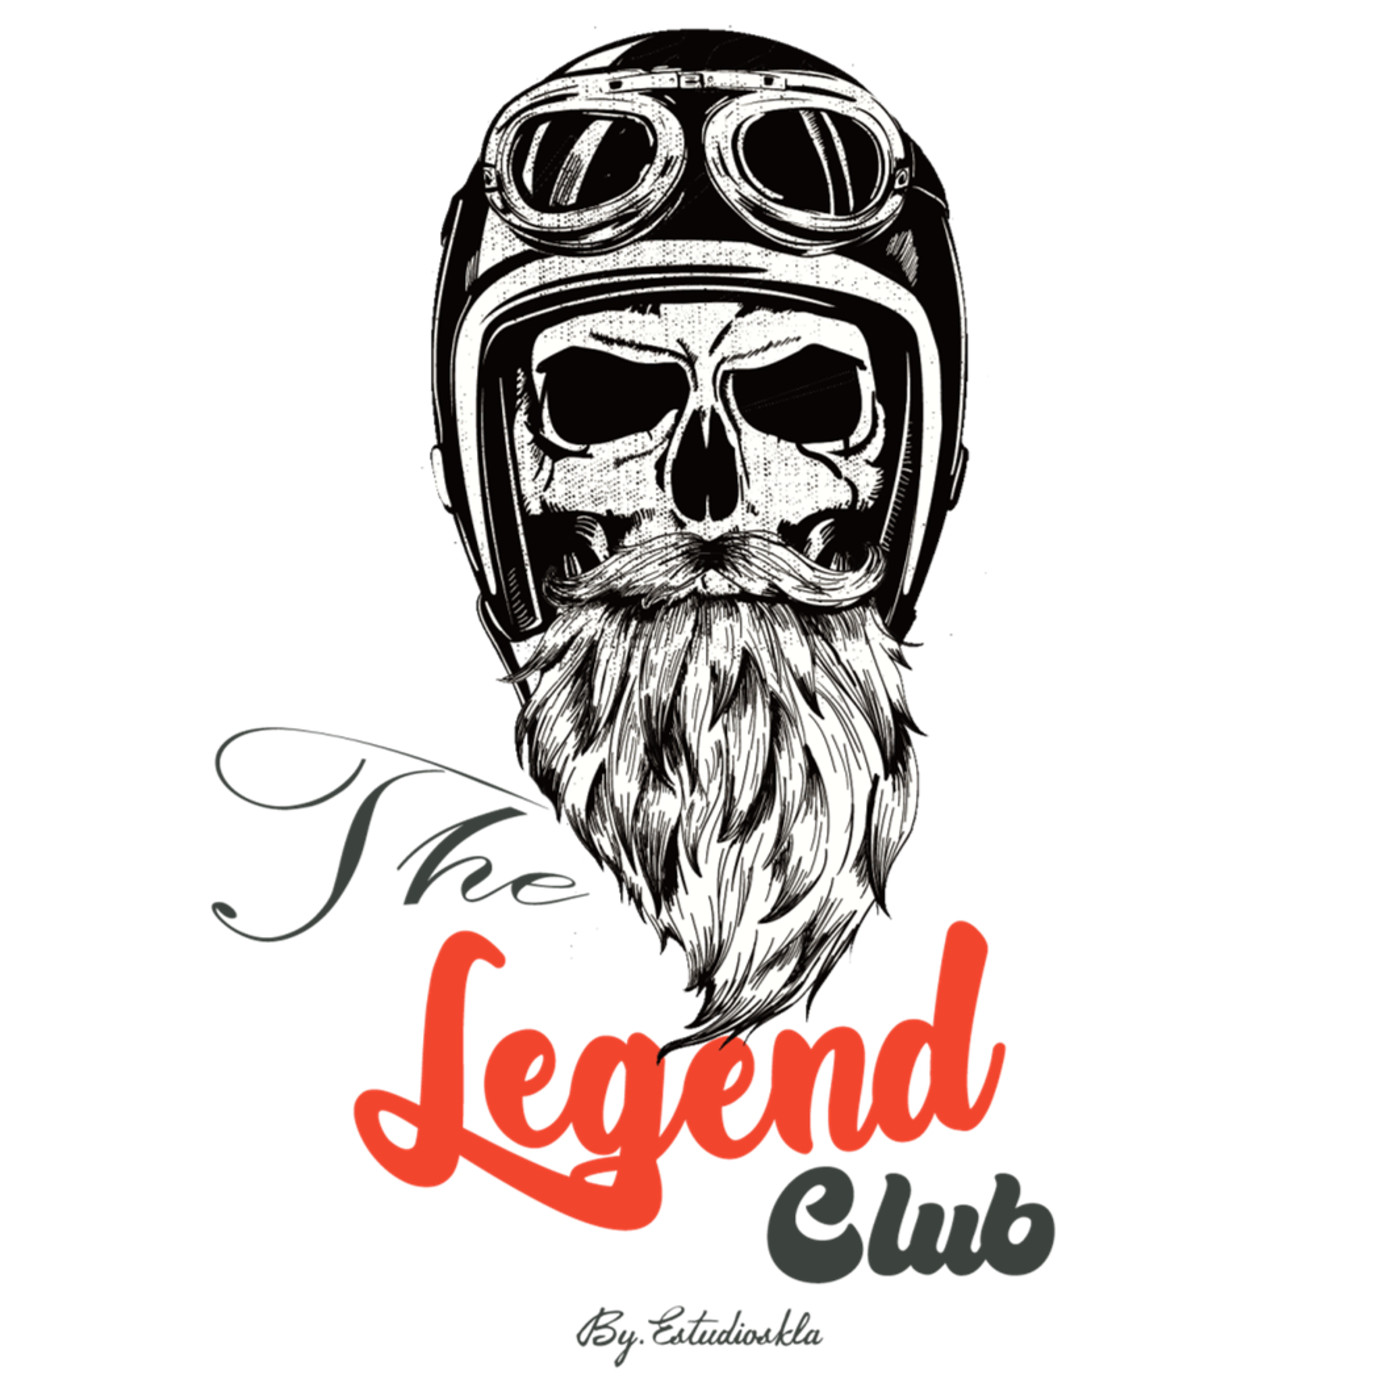 The legend Club